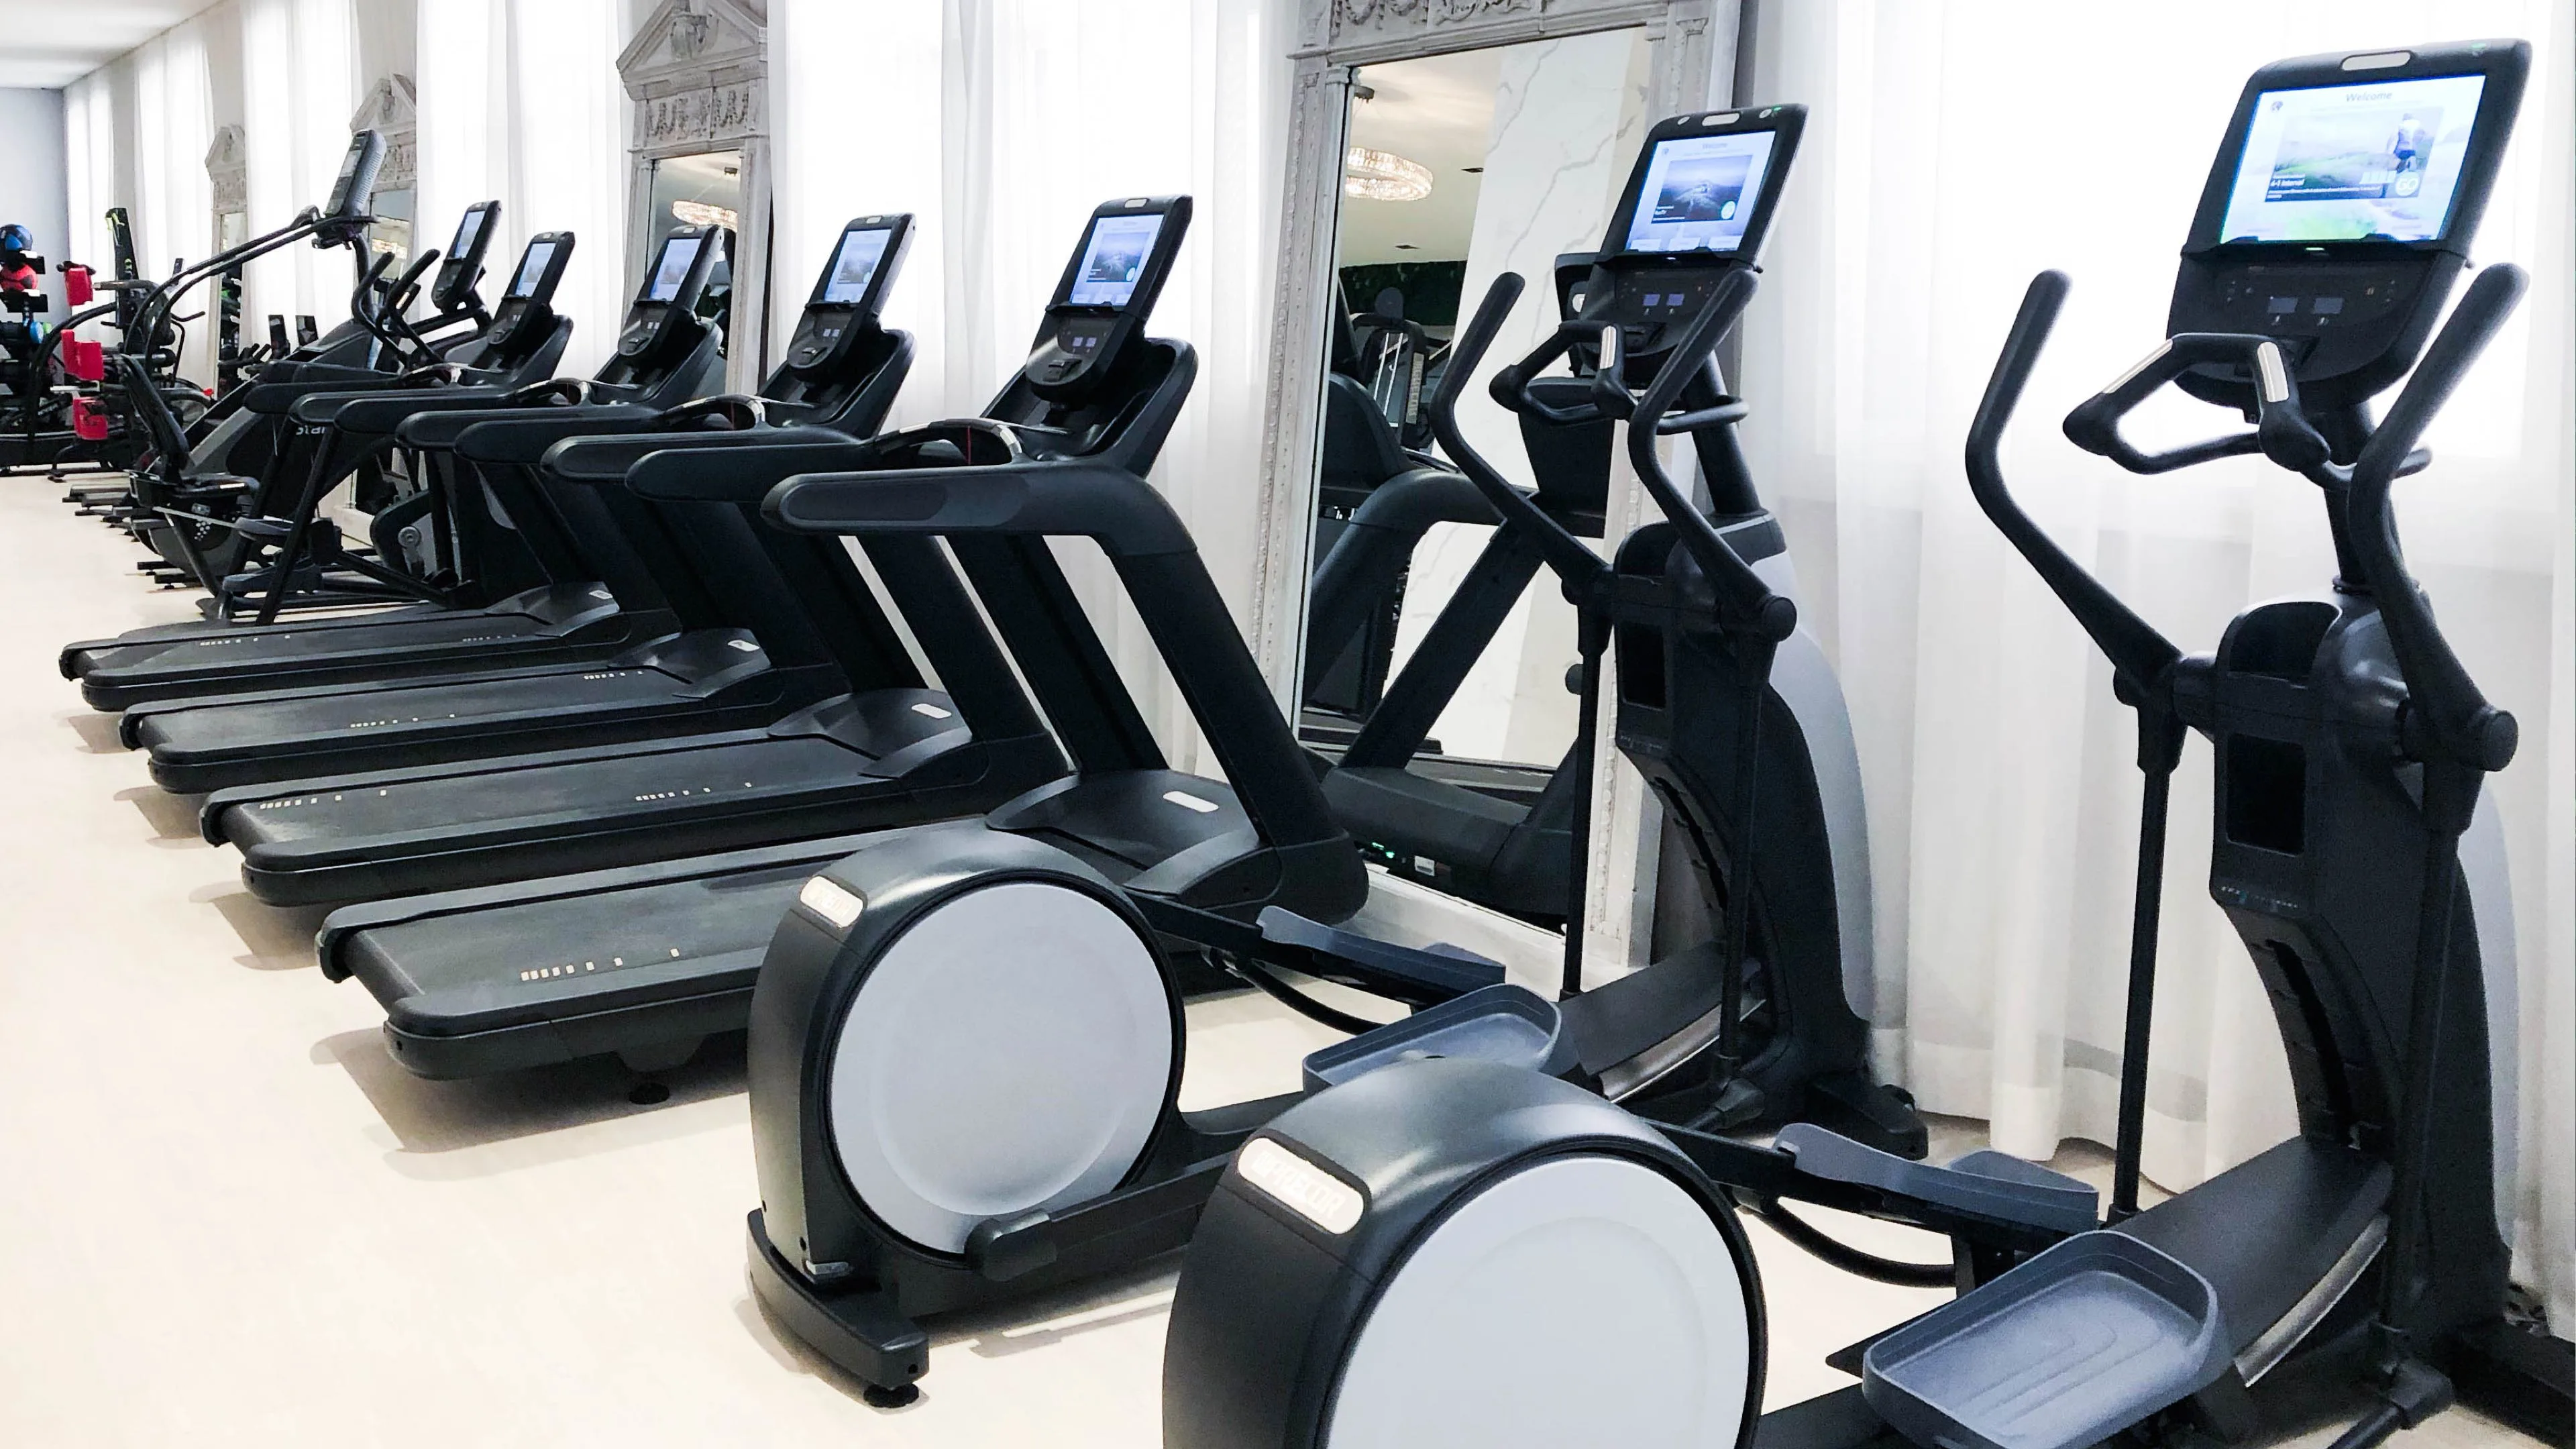 Precor cardio equipment in a gym setting